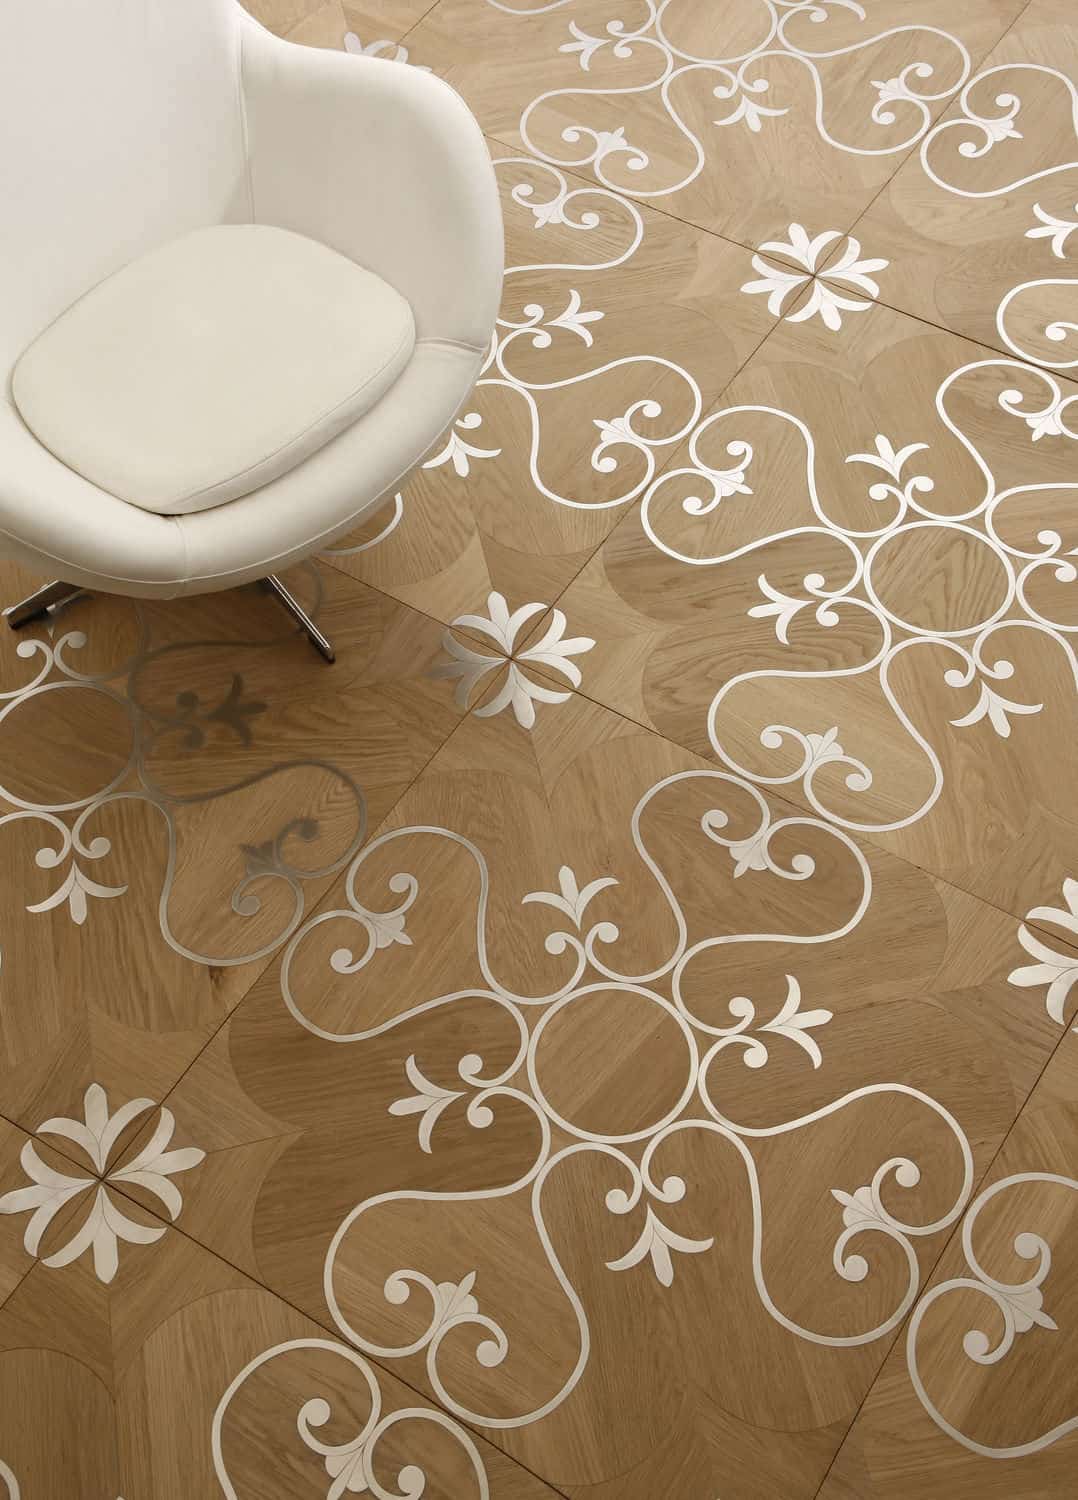 Inlay Wood Flooring 8 Stunning Design, Tile Inlay In Wood Floor Kitchen